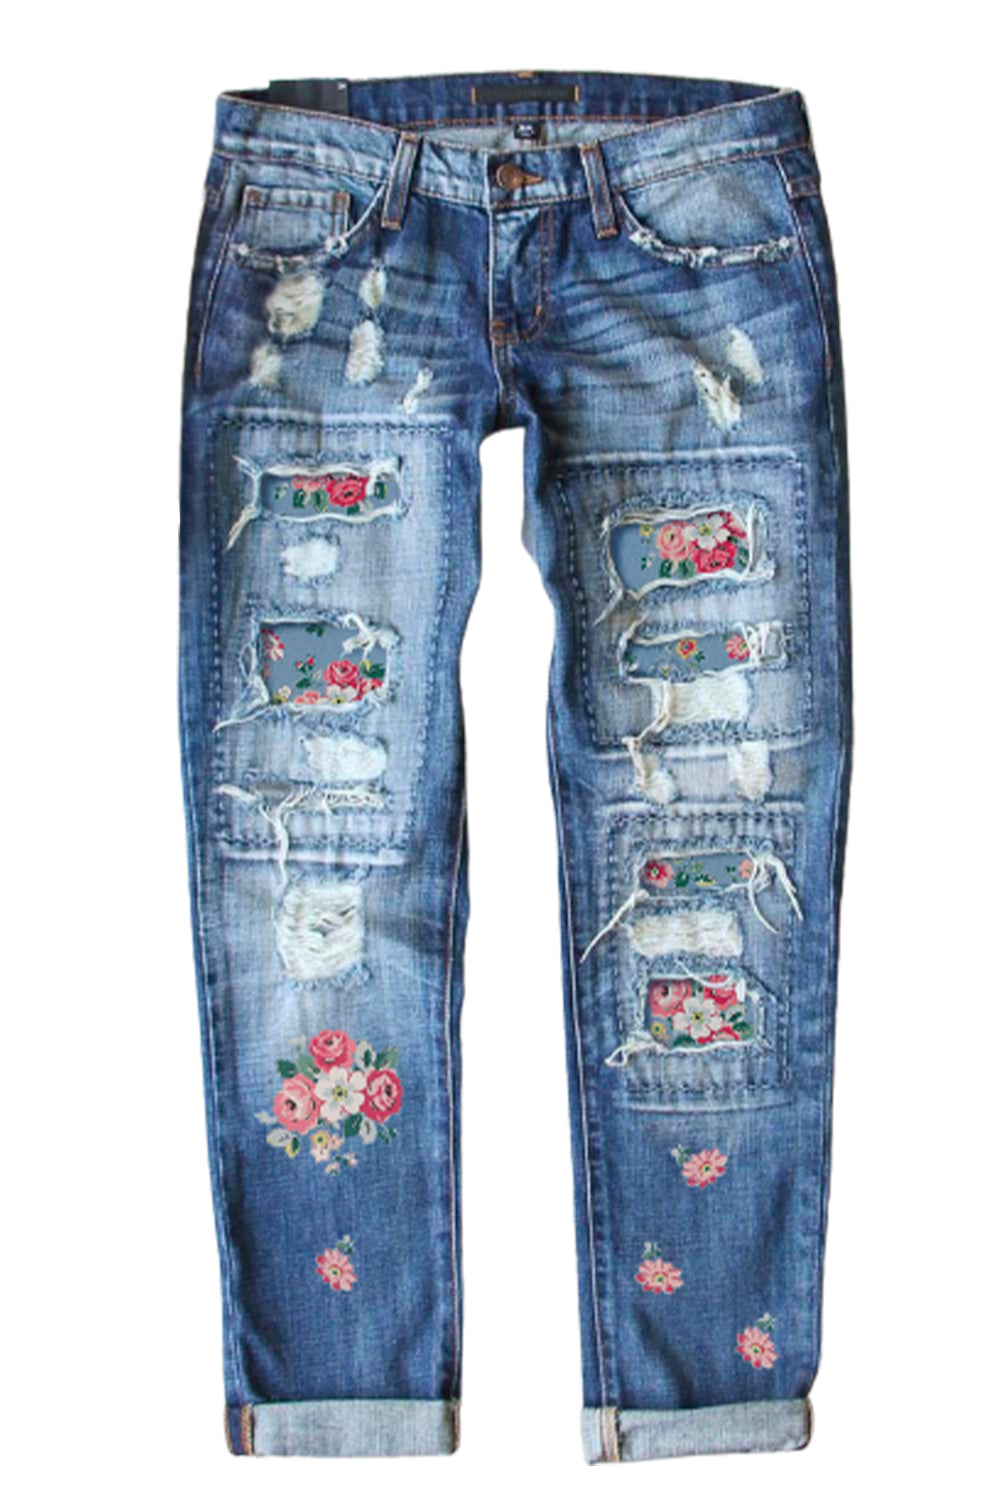 Sky Blue Floral Print Contrast Distressed Mid Waist Jeans Graphic Pants JT's Designer Fashion